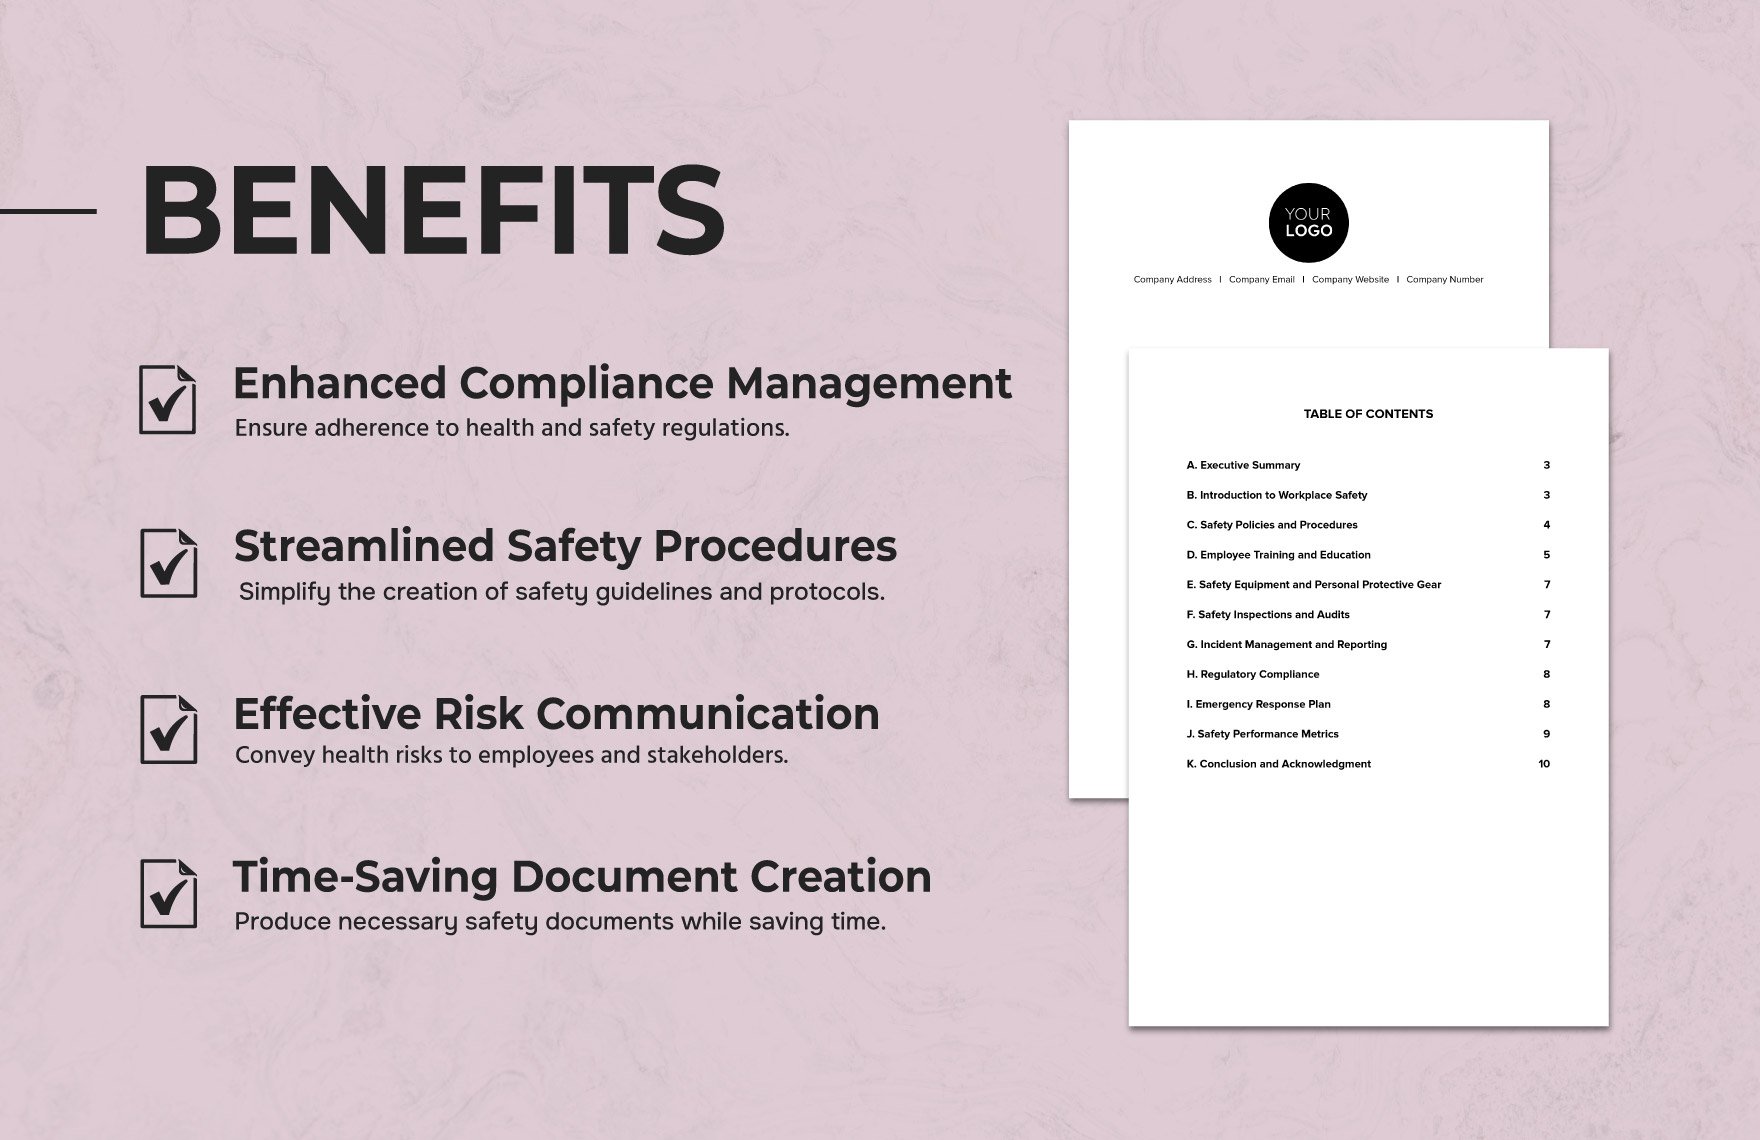 Workplace Safety Portfolio Compilation Template